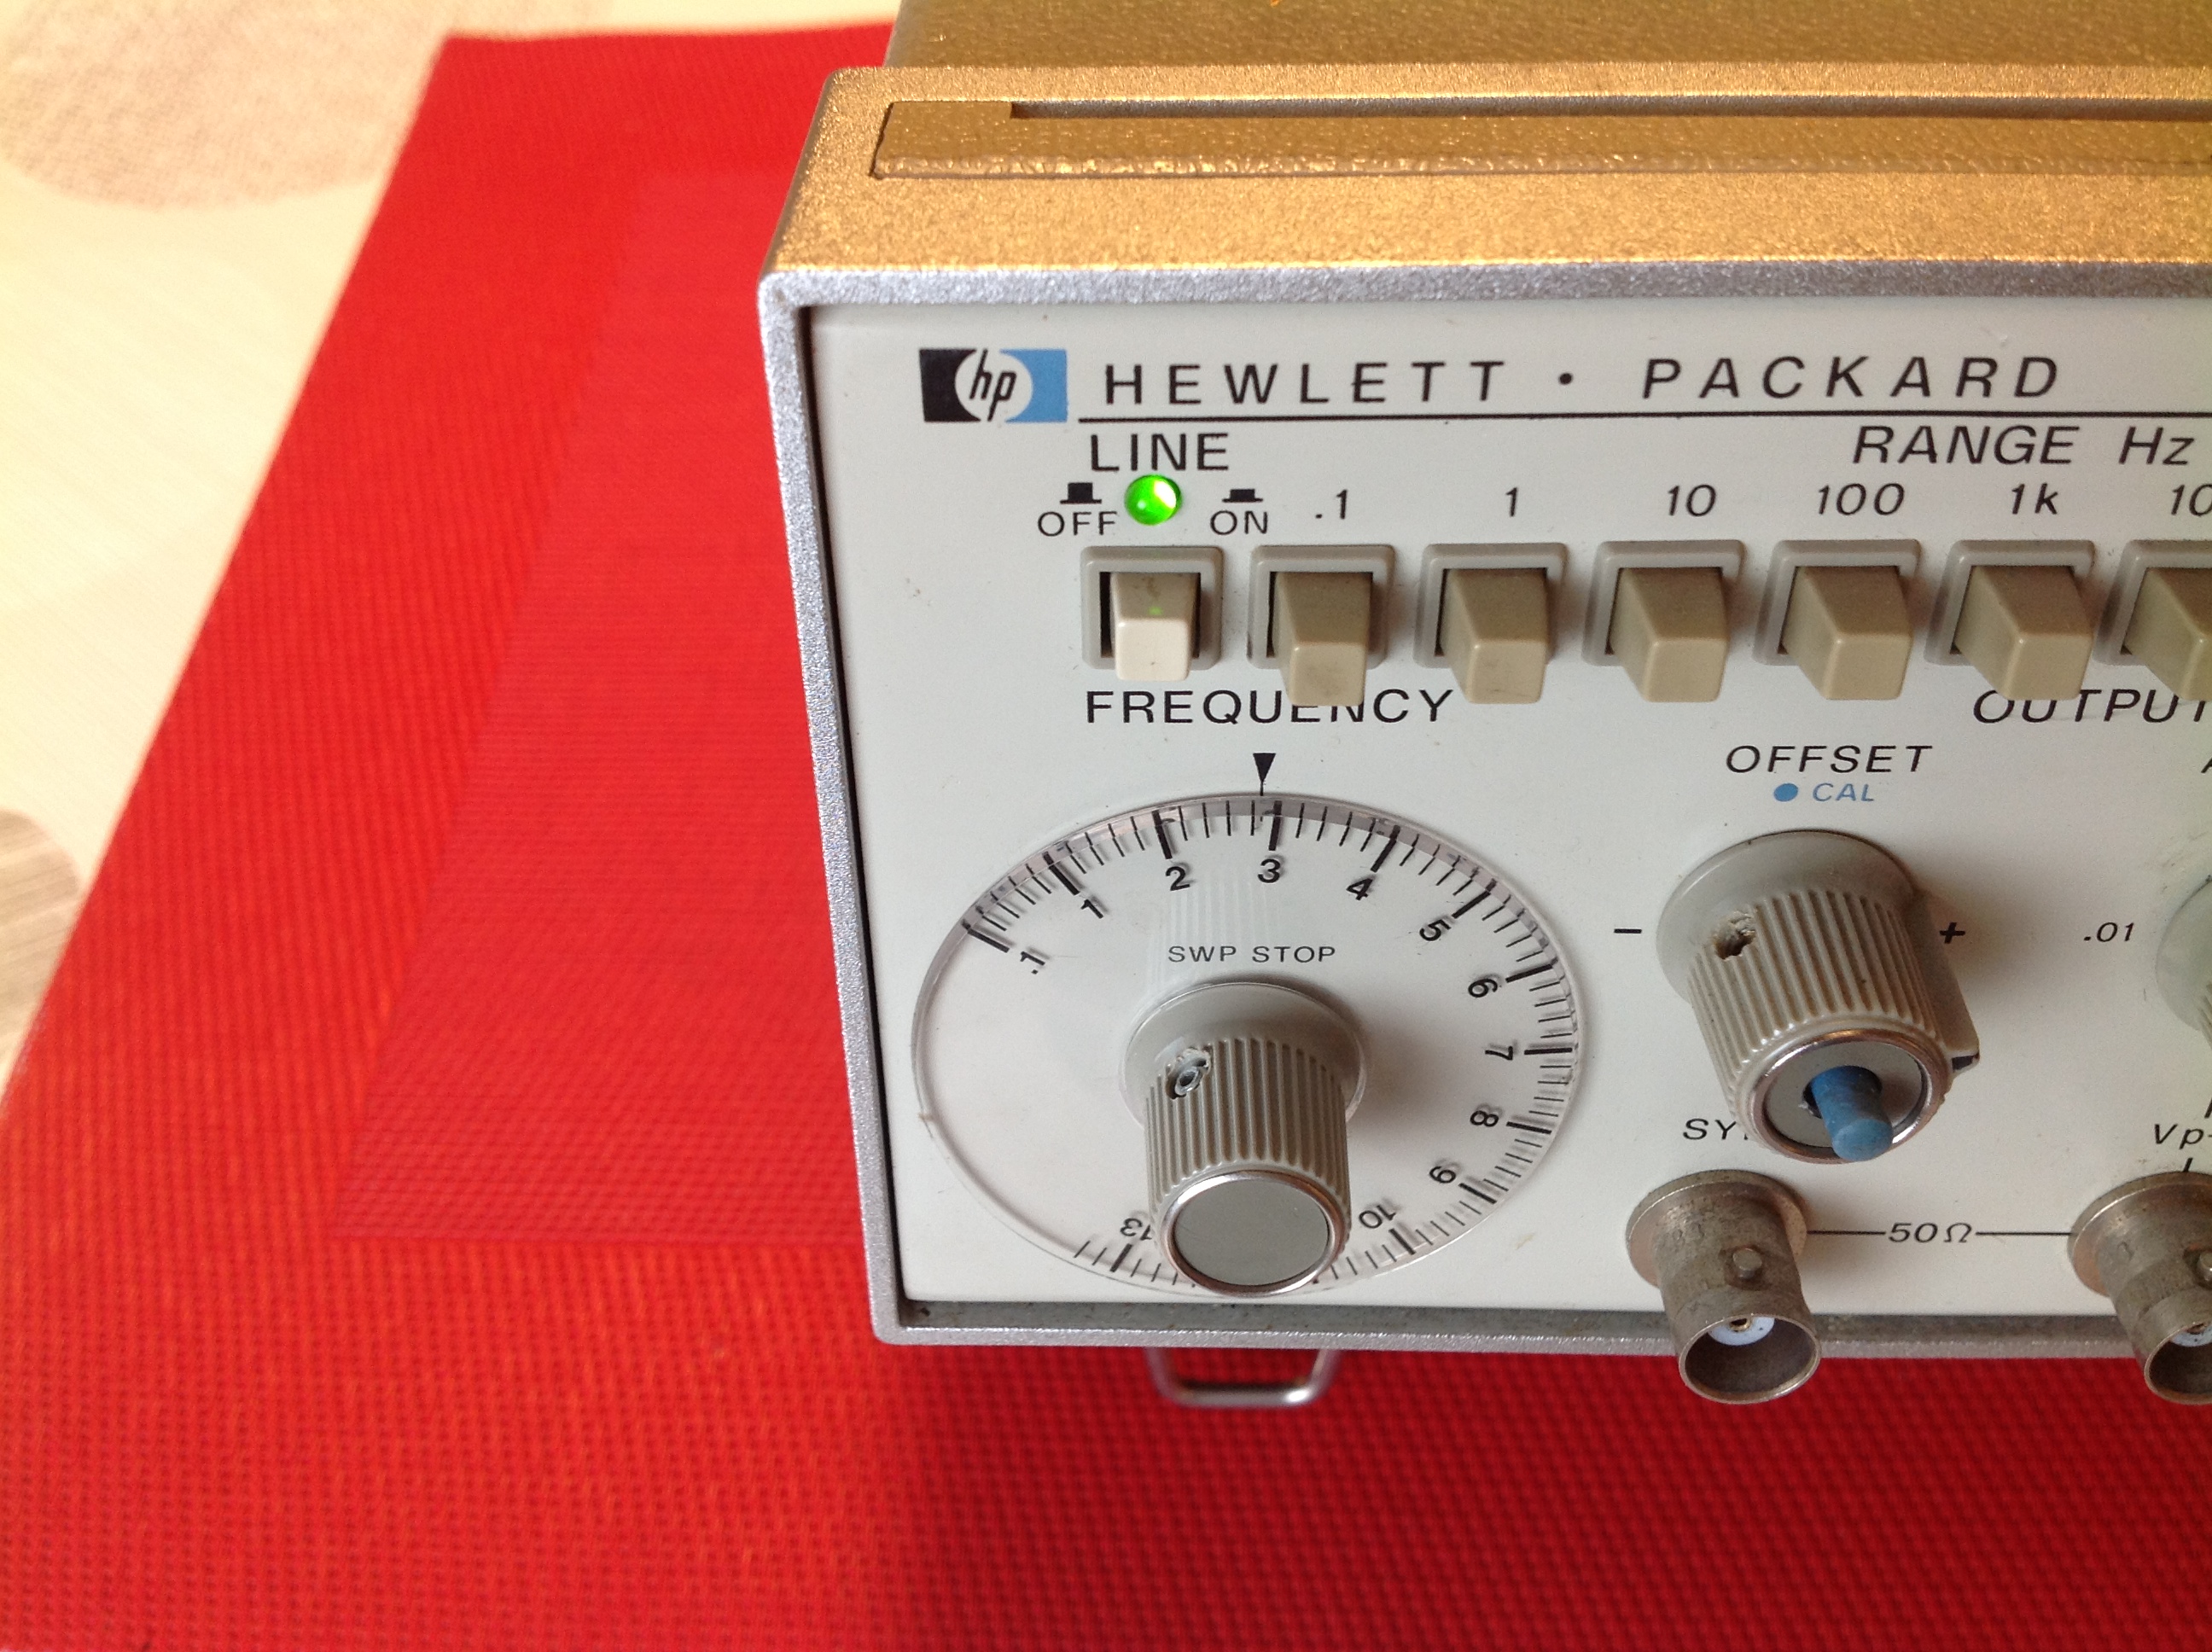 Hewlett Packard 3312 A Function Generator